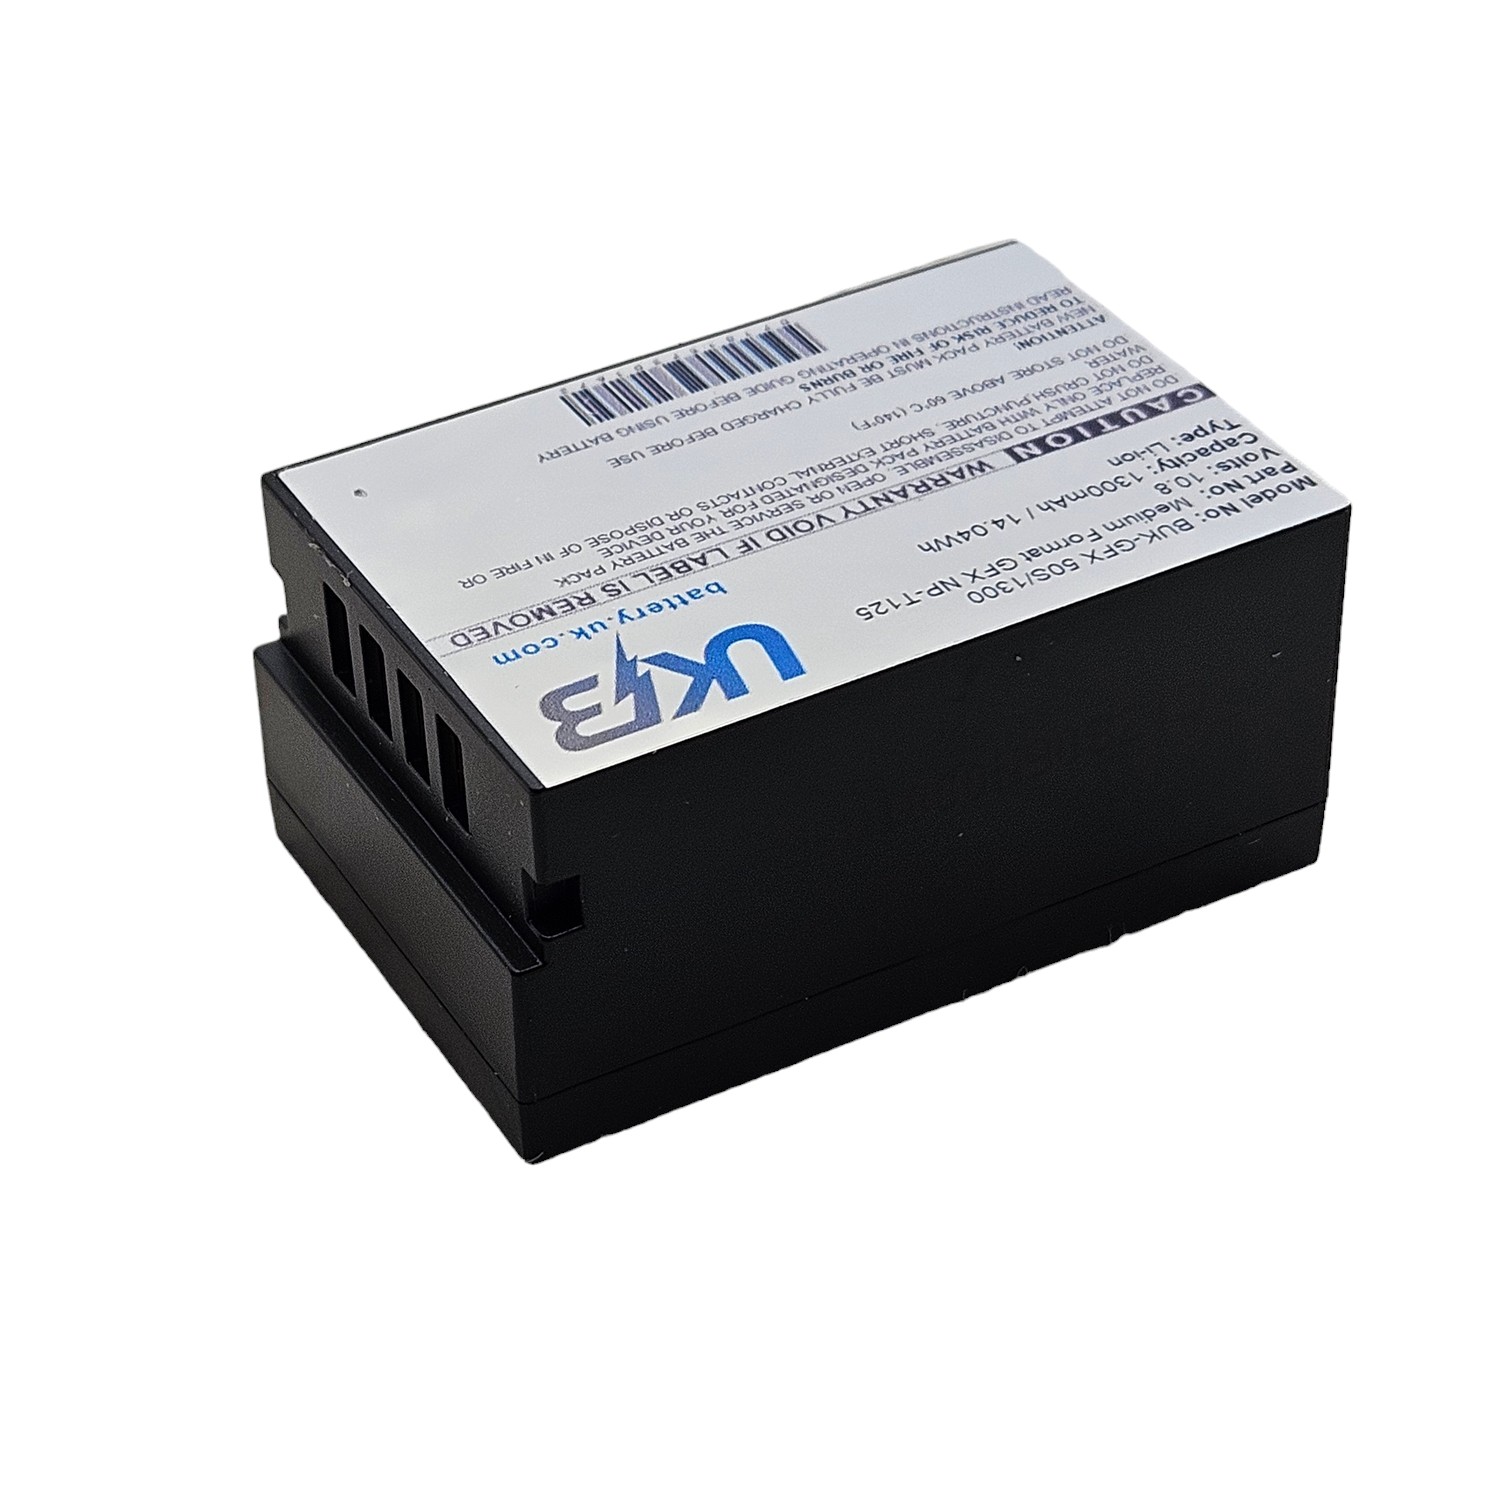 Fujifilm GFX 50S Compatible Replacement Battery